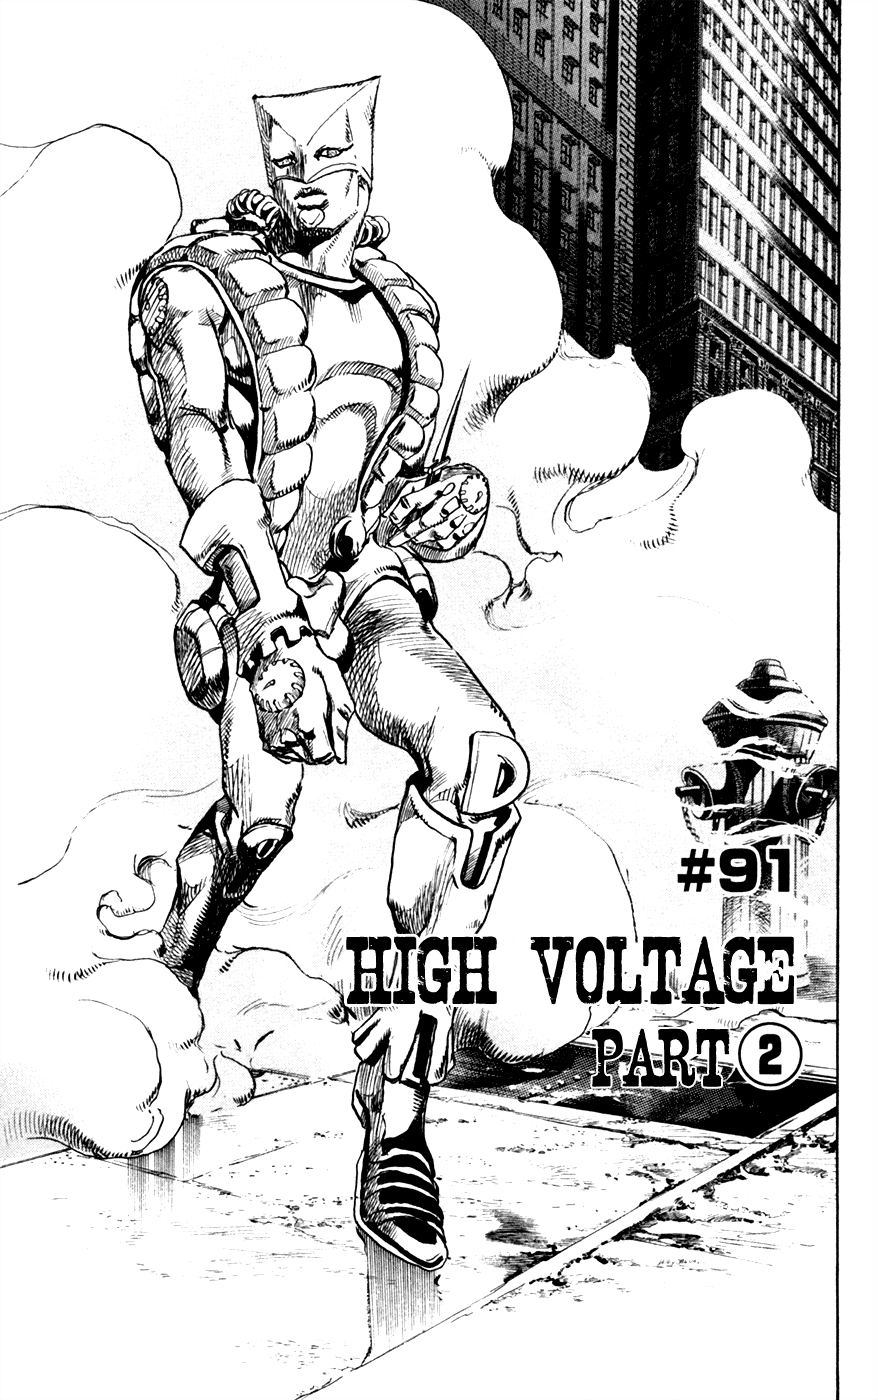 JoJo's Bizarre Adventure Part 7 Steel Ball Run Vol. 23 Ch. 91 High Voltage Part 2